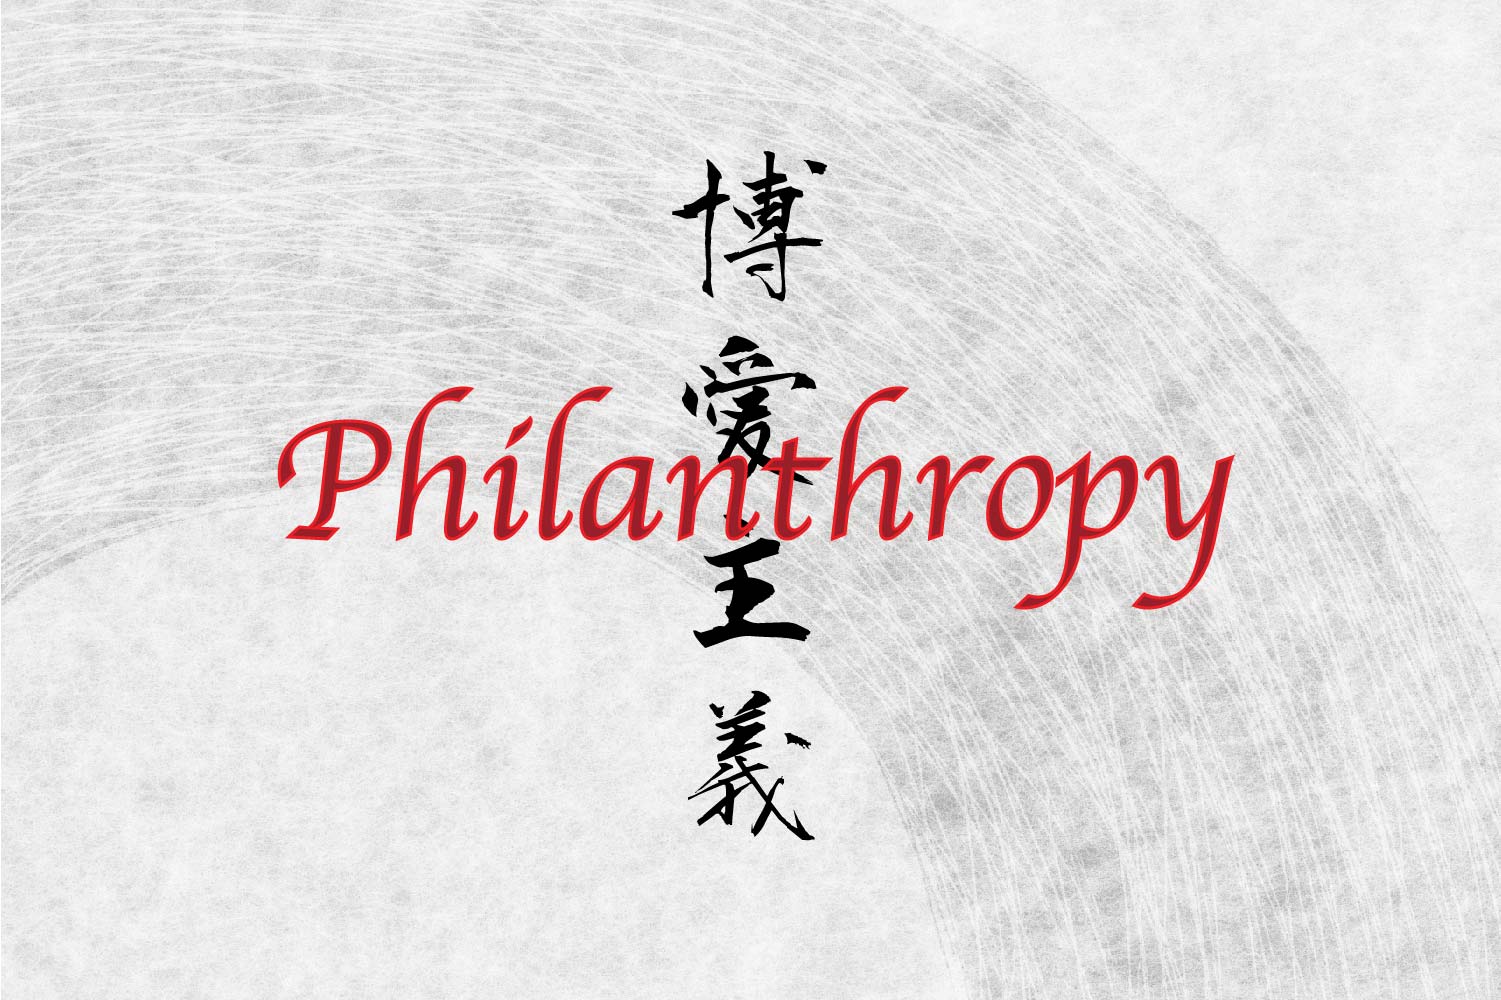 Philanthoropy in Japanese 4 Kanji Idiom for Tattoo